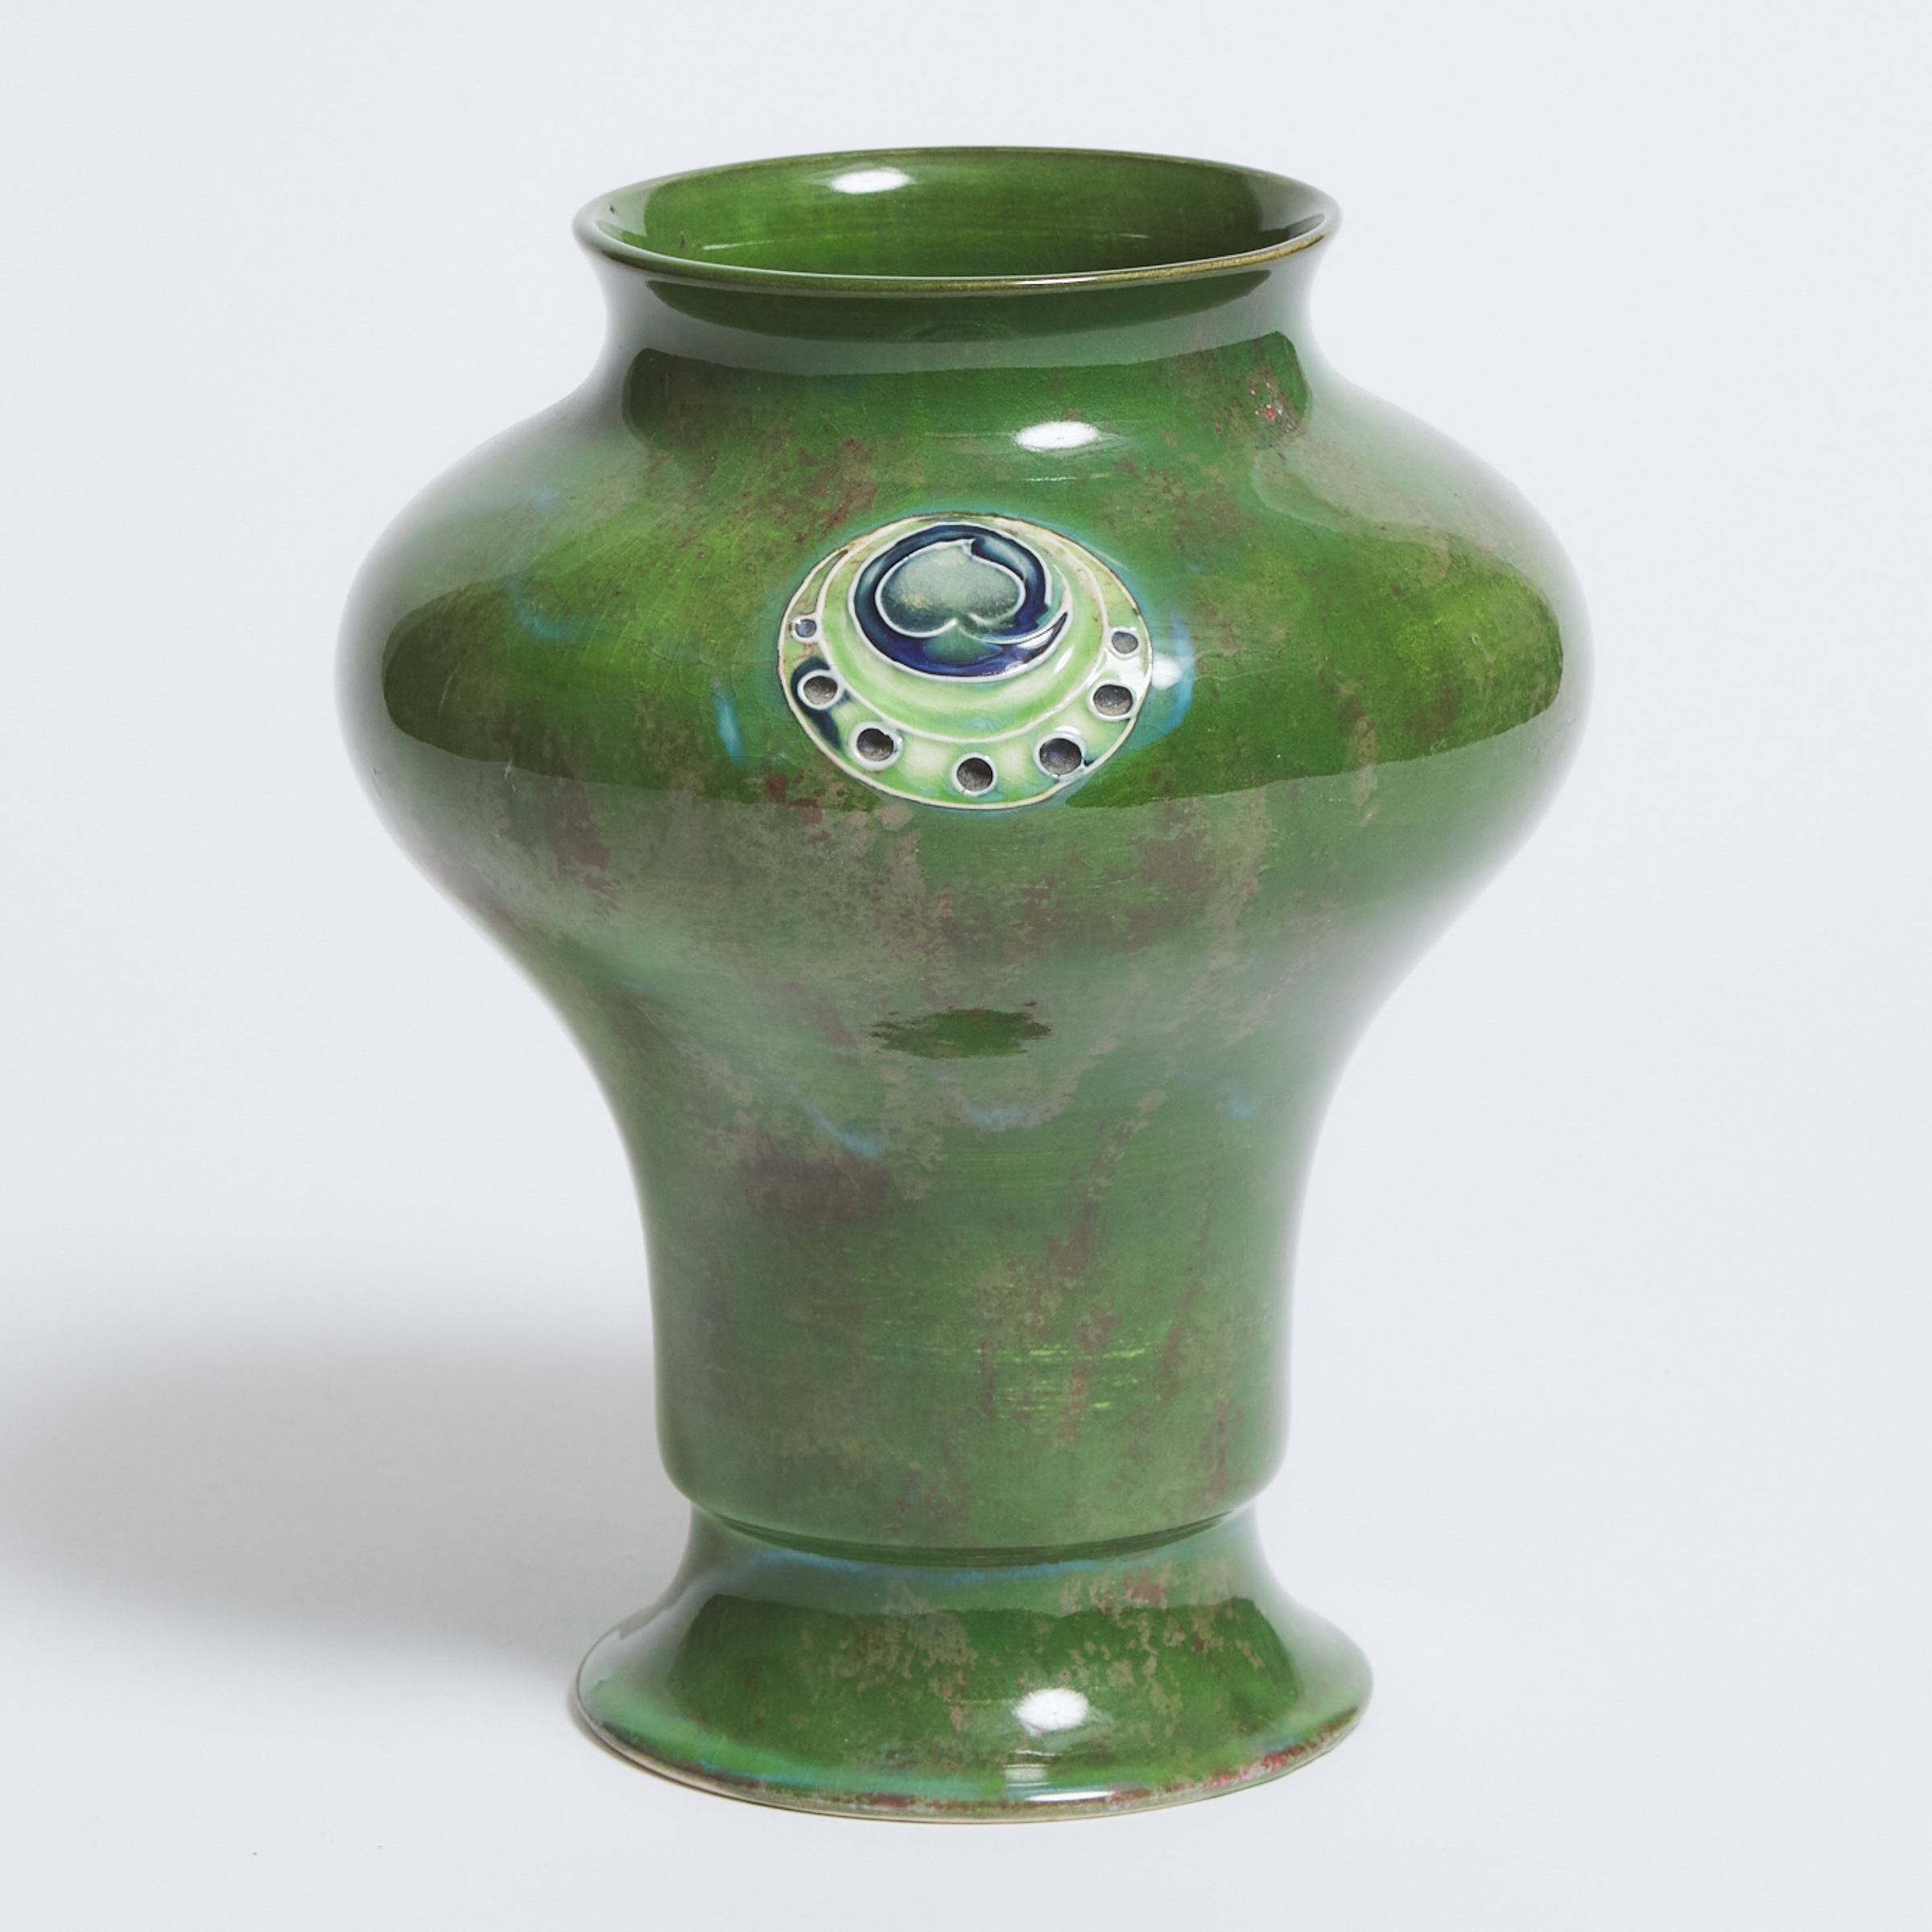 Macintyre Moorcroft Mottled Green Flamminian Vase, for Liberty & Co., c.1906-13